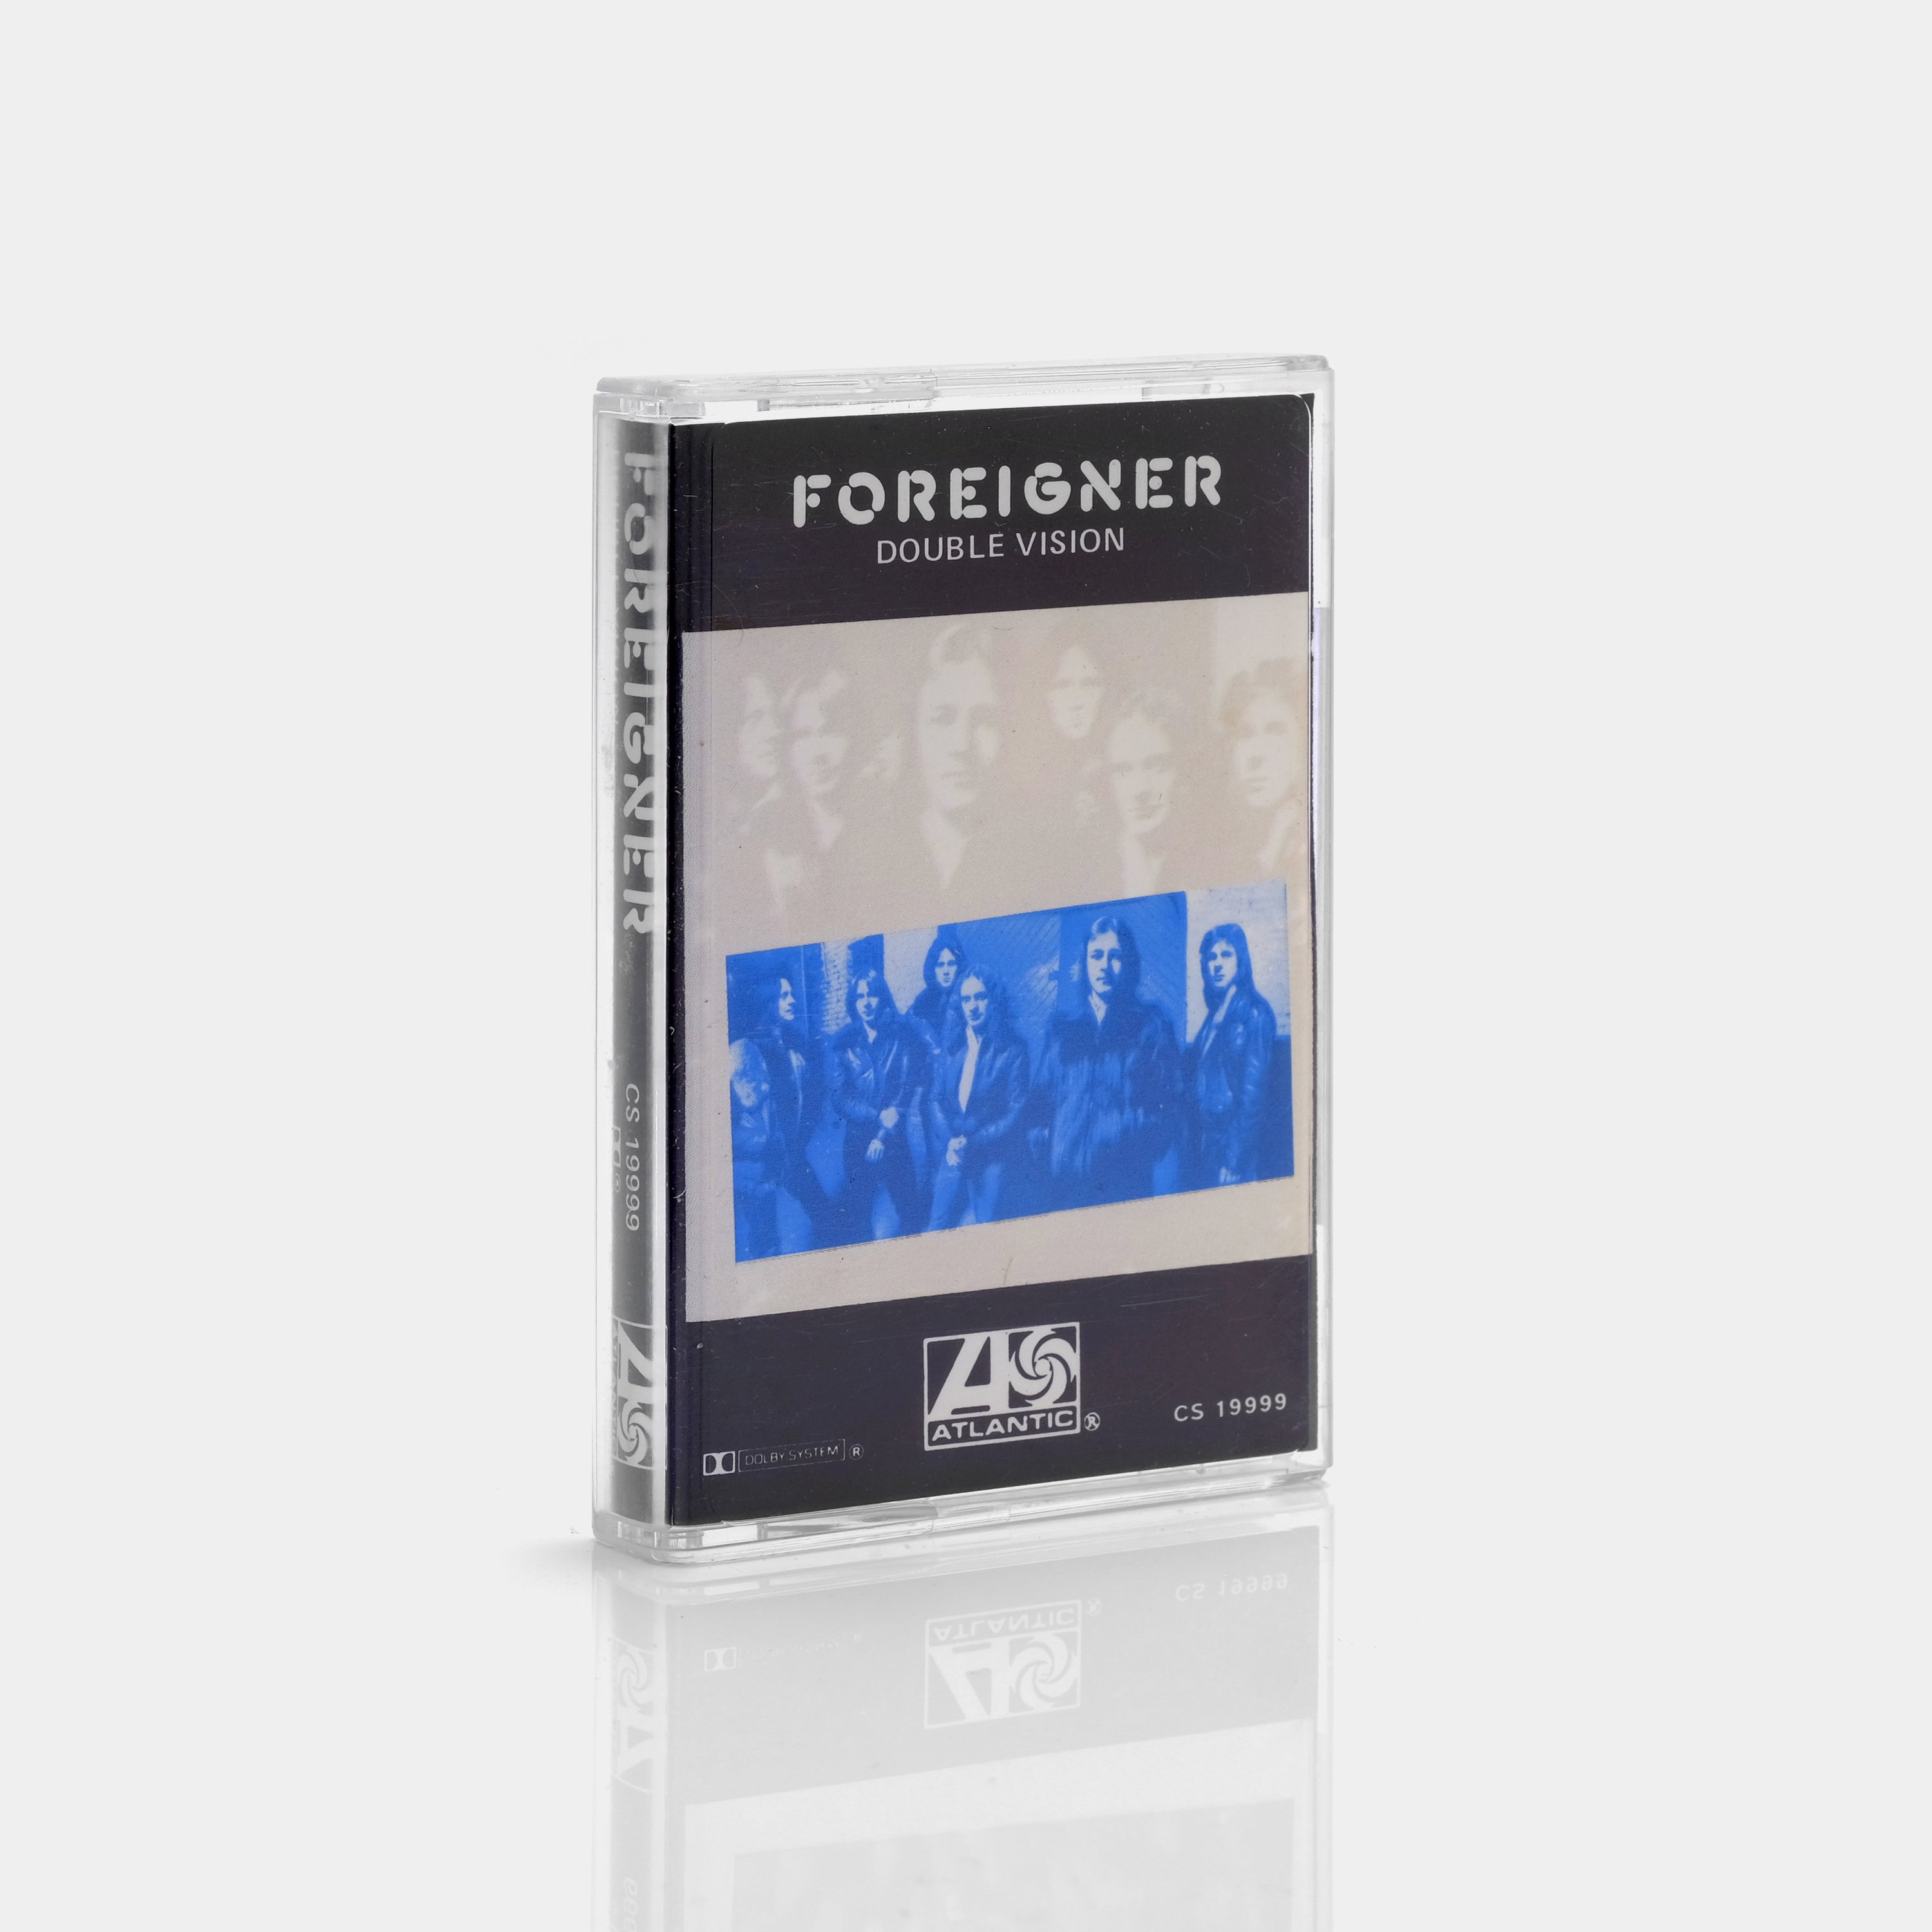 Foreigner - Double Vision Cassette Tape